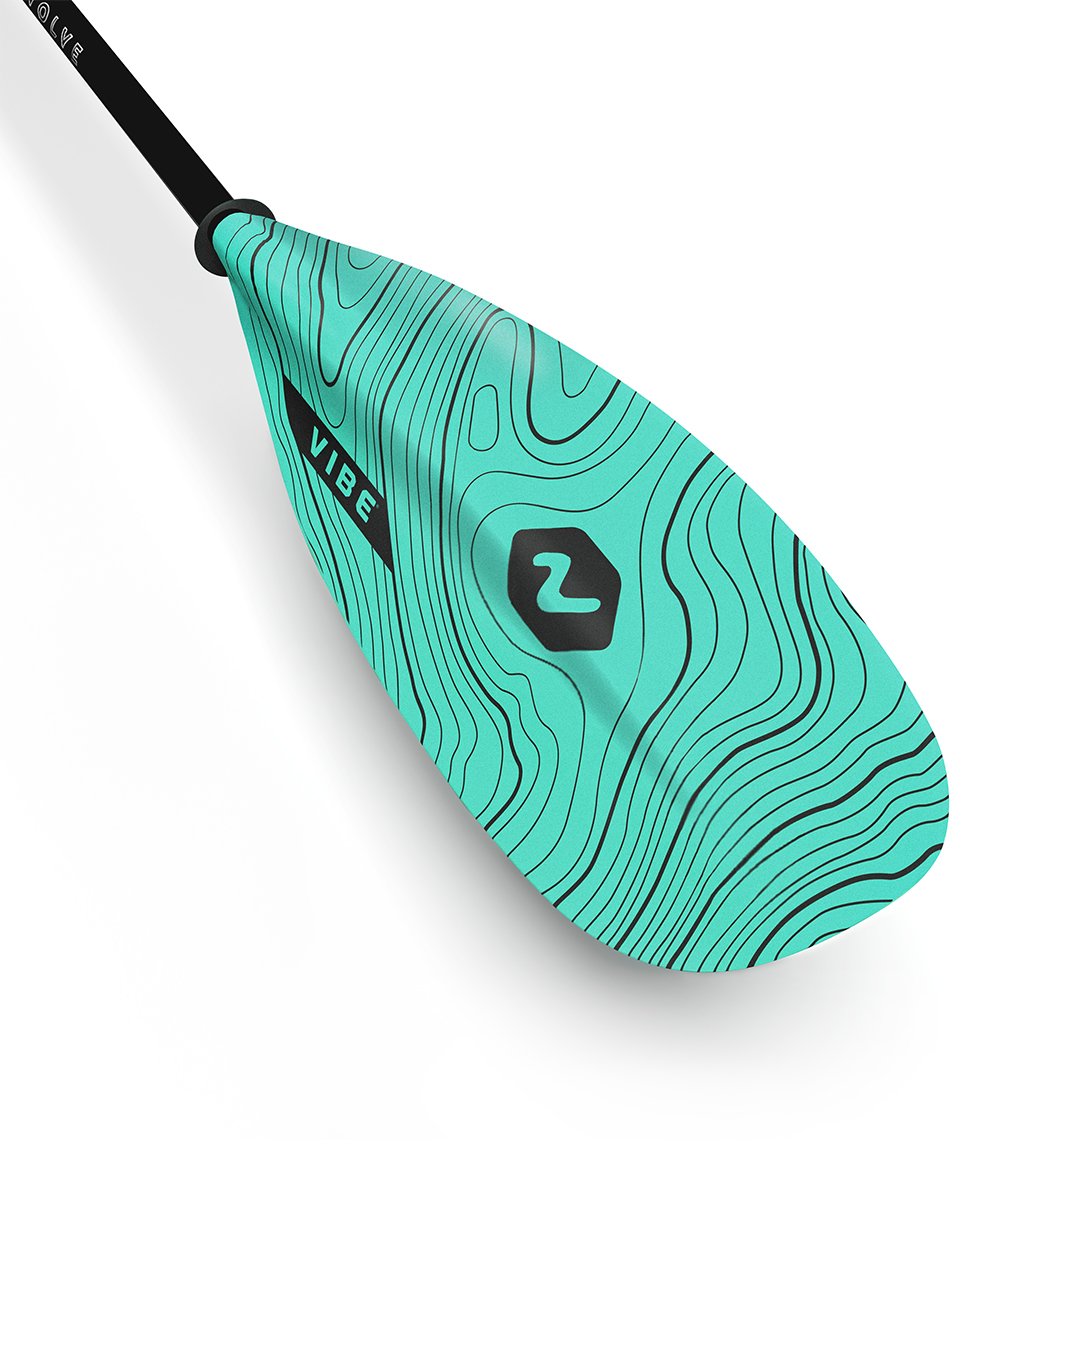 BC_Kayak-Paddle-Product-Render_2.jpg